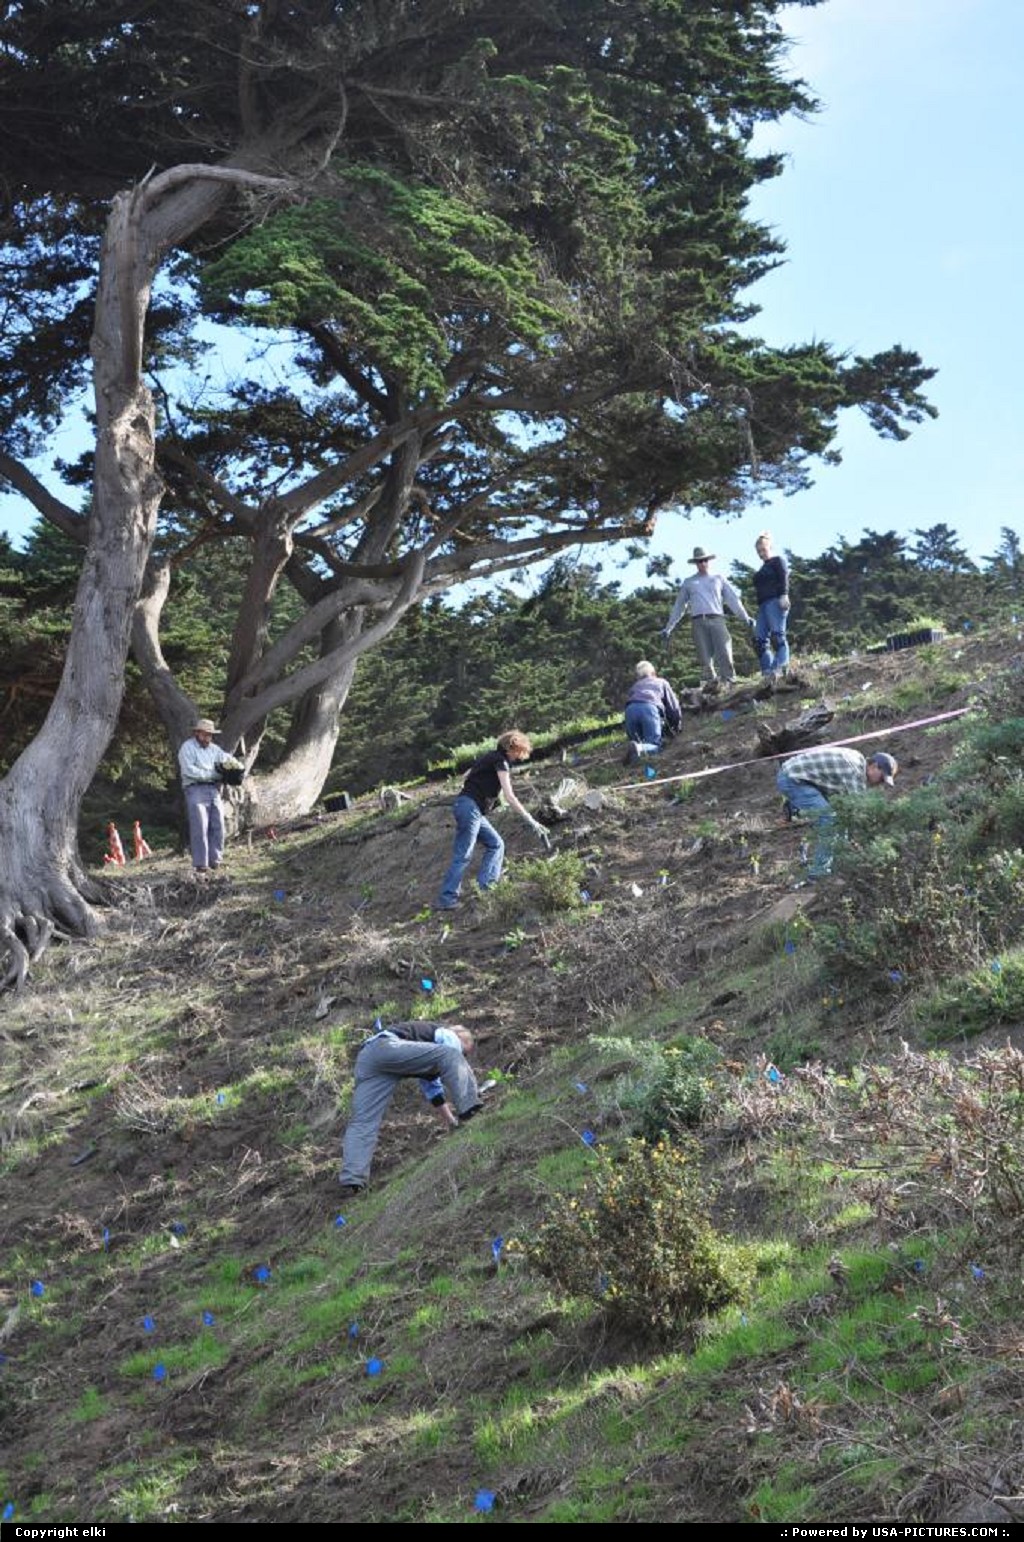 Picture by elki: San Francisco California   coastal trail, volunteer